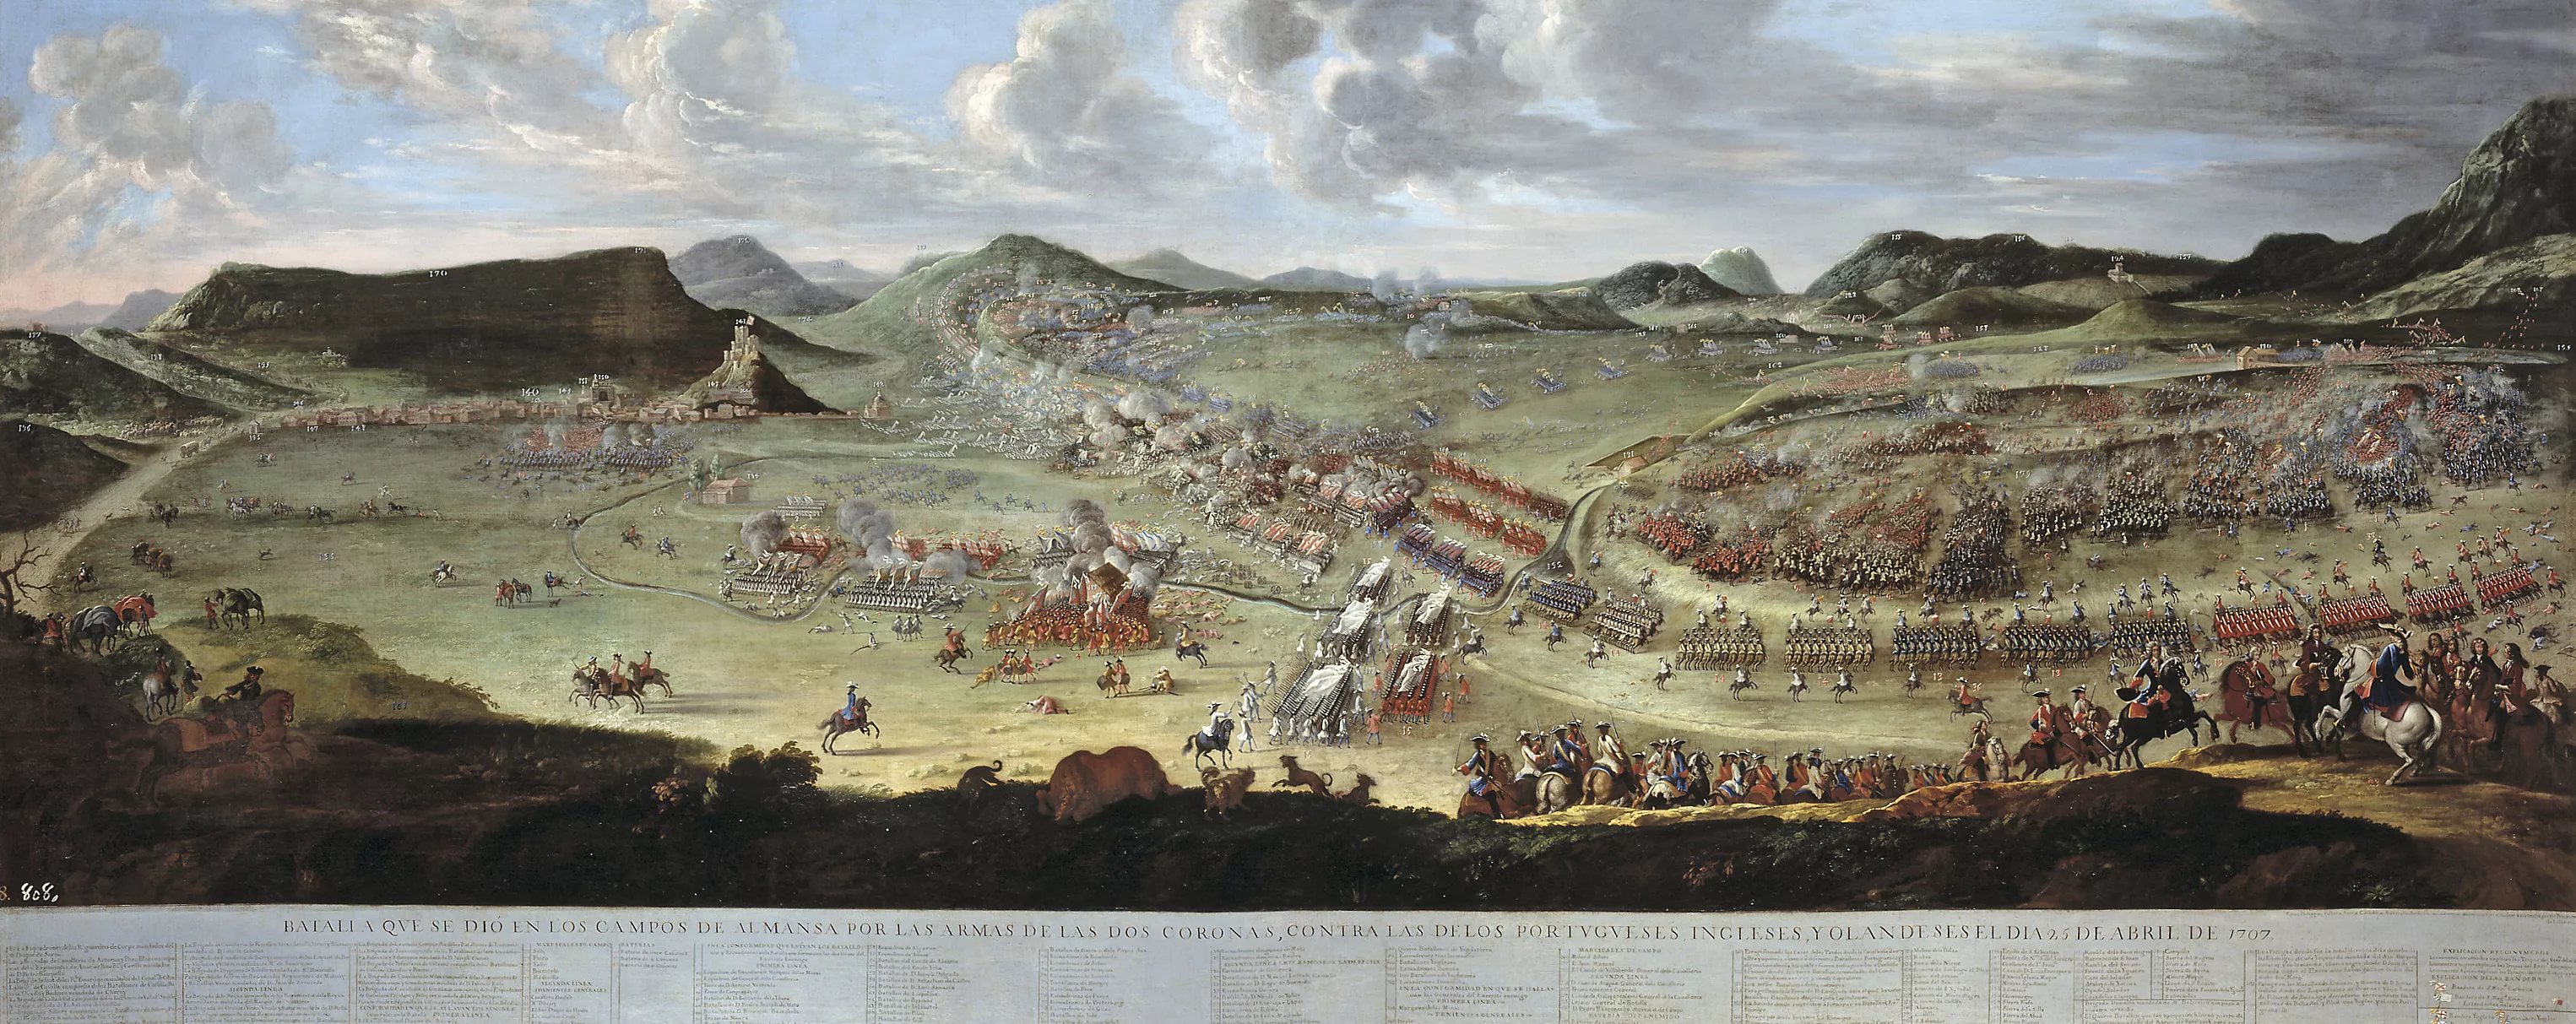 Retrat de la batalla d'Almansa de 1707, obra de Buonaventura Ligli i Filippo Pallotta